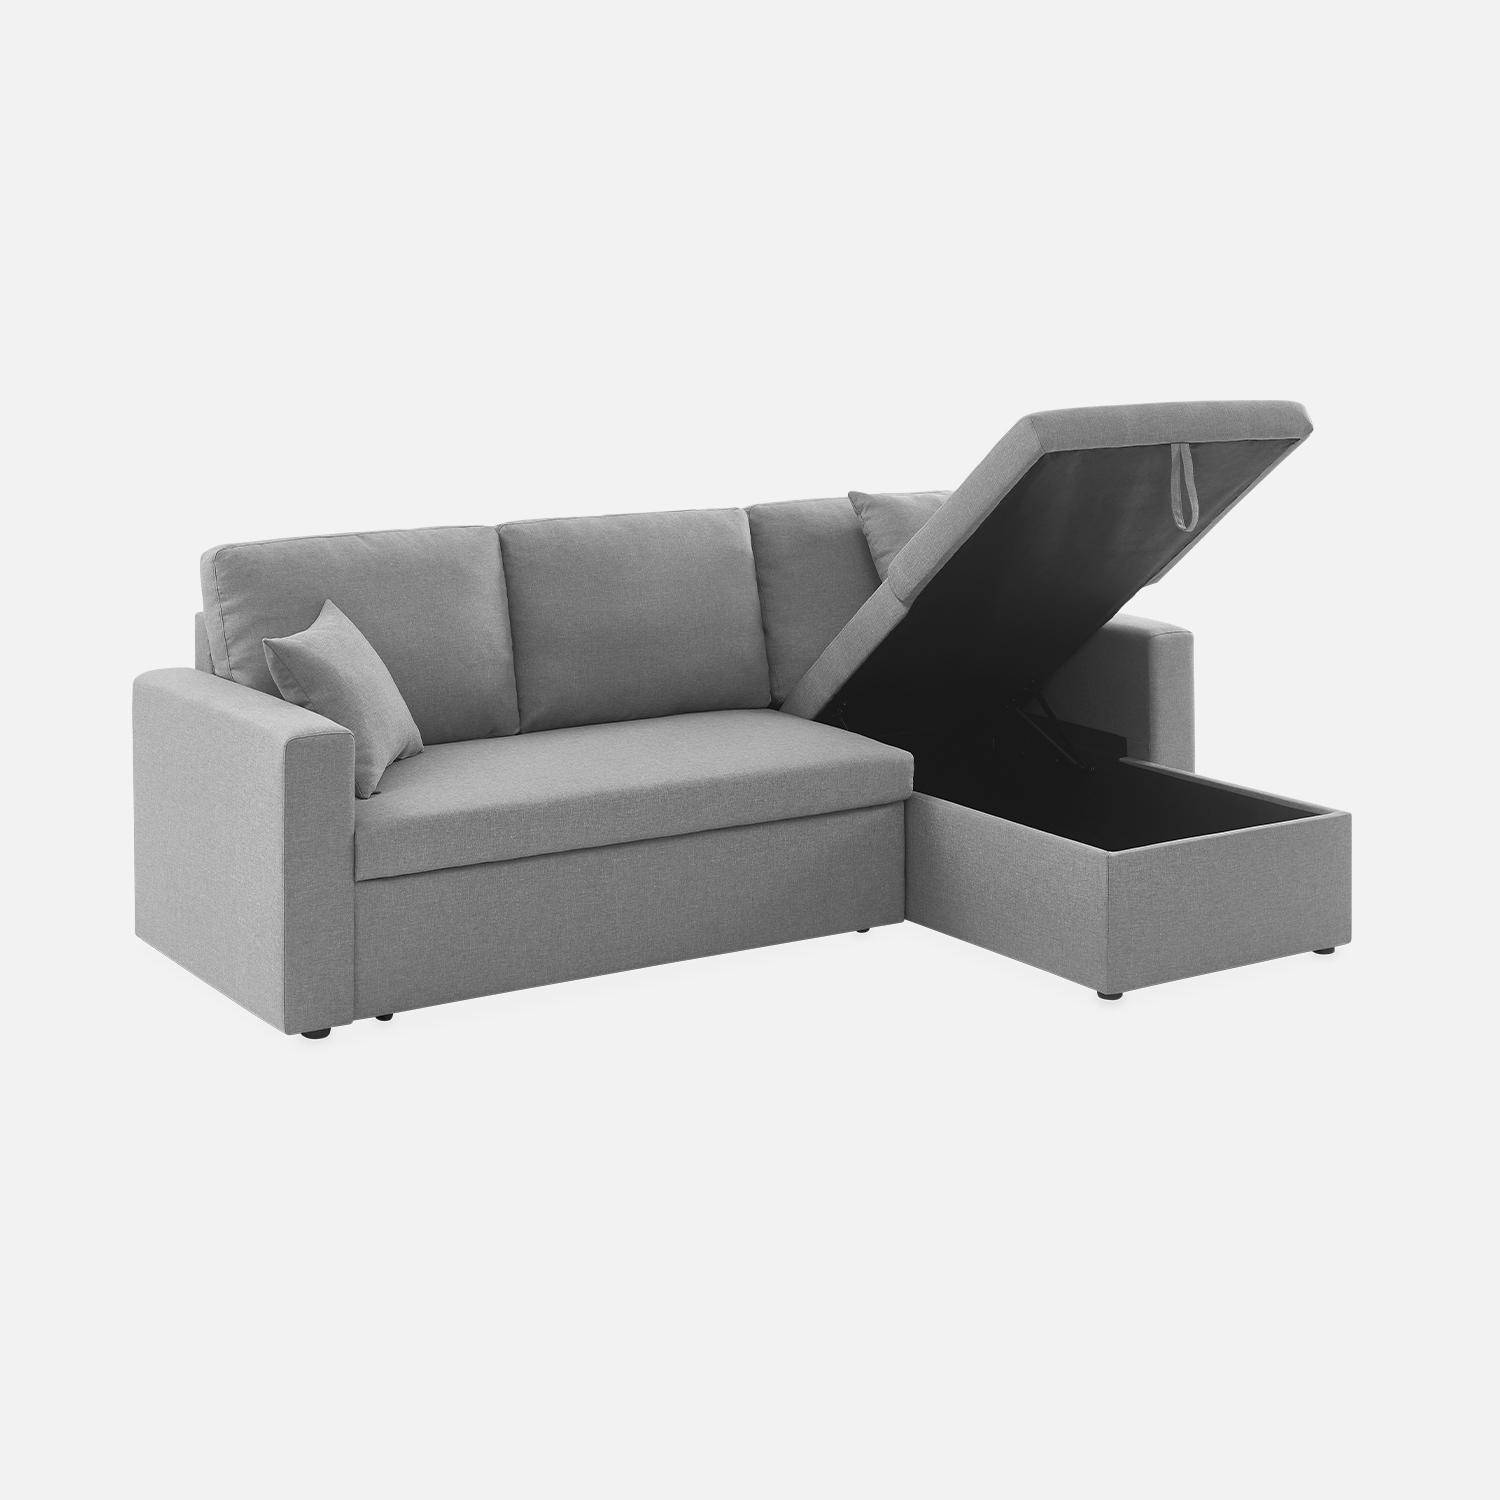 3-seater reversible light grey corner sofa bed with storage box, L219xD81xH68cm, IDA Photo6